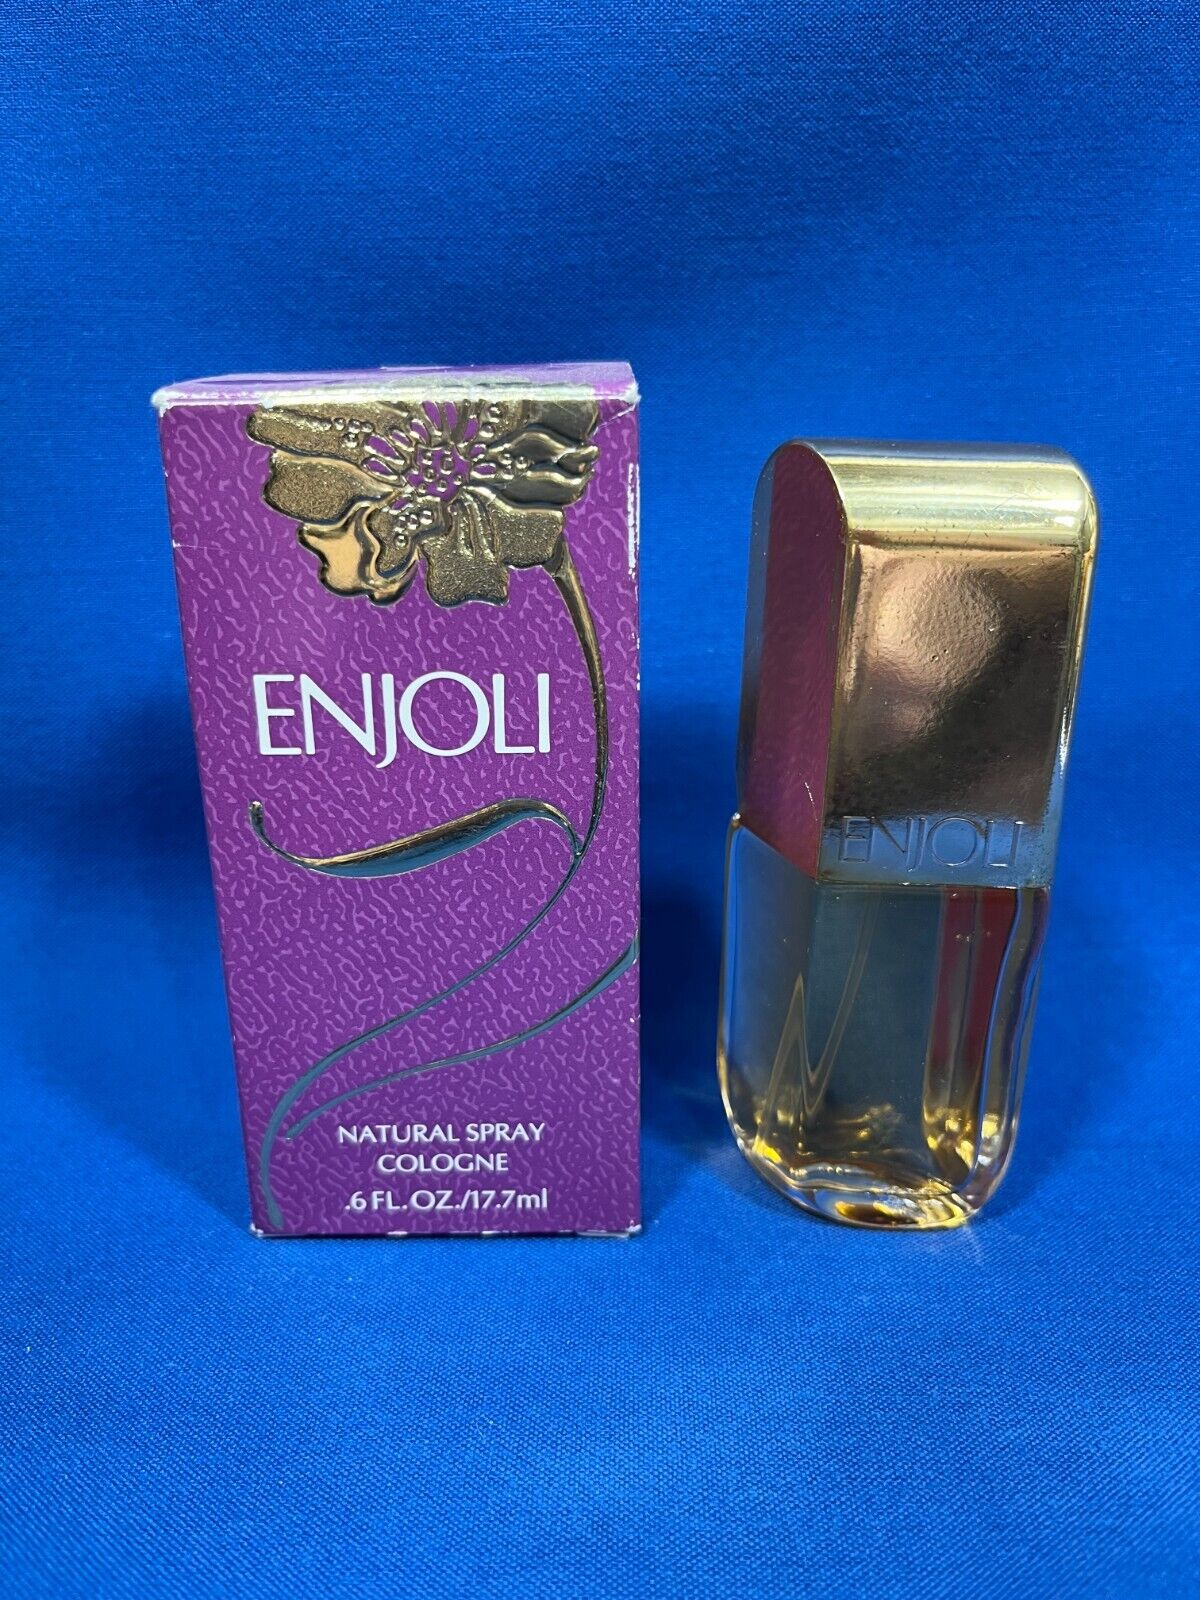 NOS Vtg Revlon Enjoli Natural Spray Cologne .6oz/17.7ml Perfume Fragrance NIB